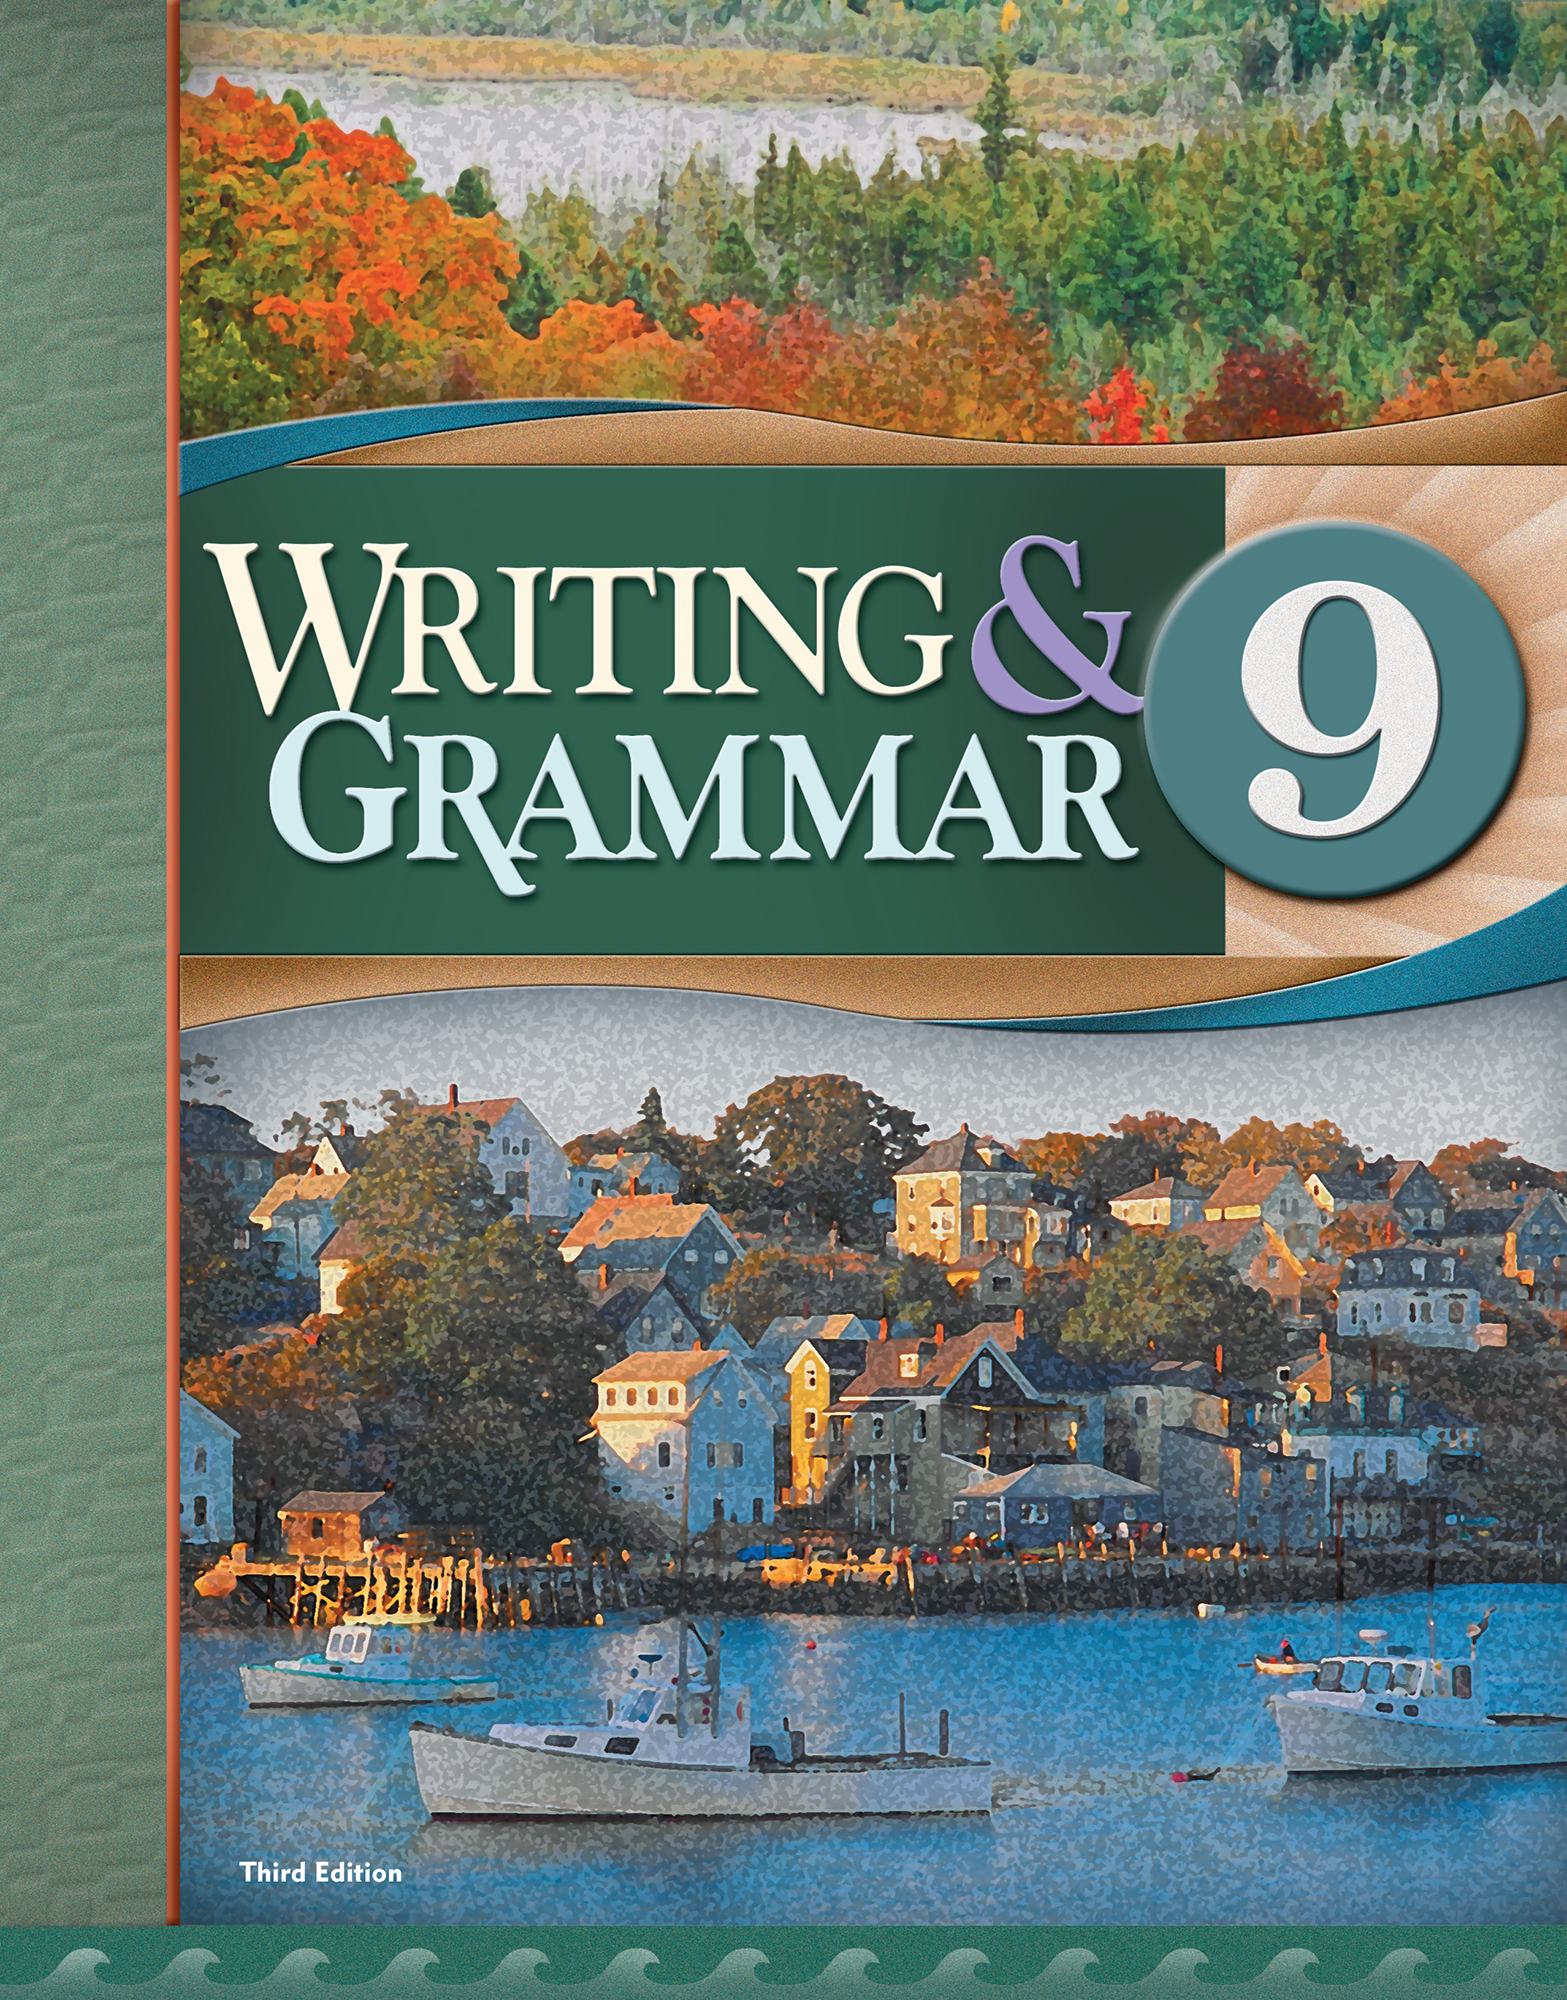 Writing & Grammar 9 Student Text, 3rd ed.